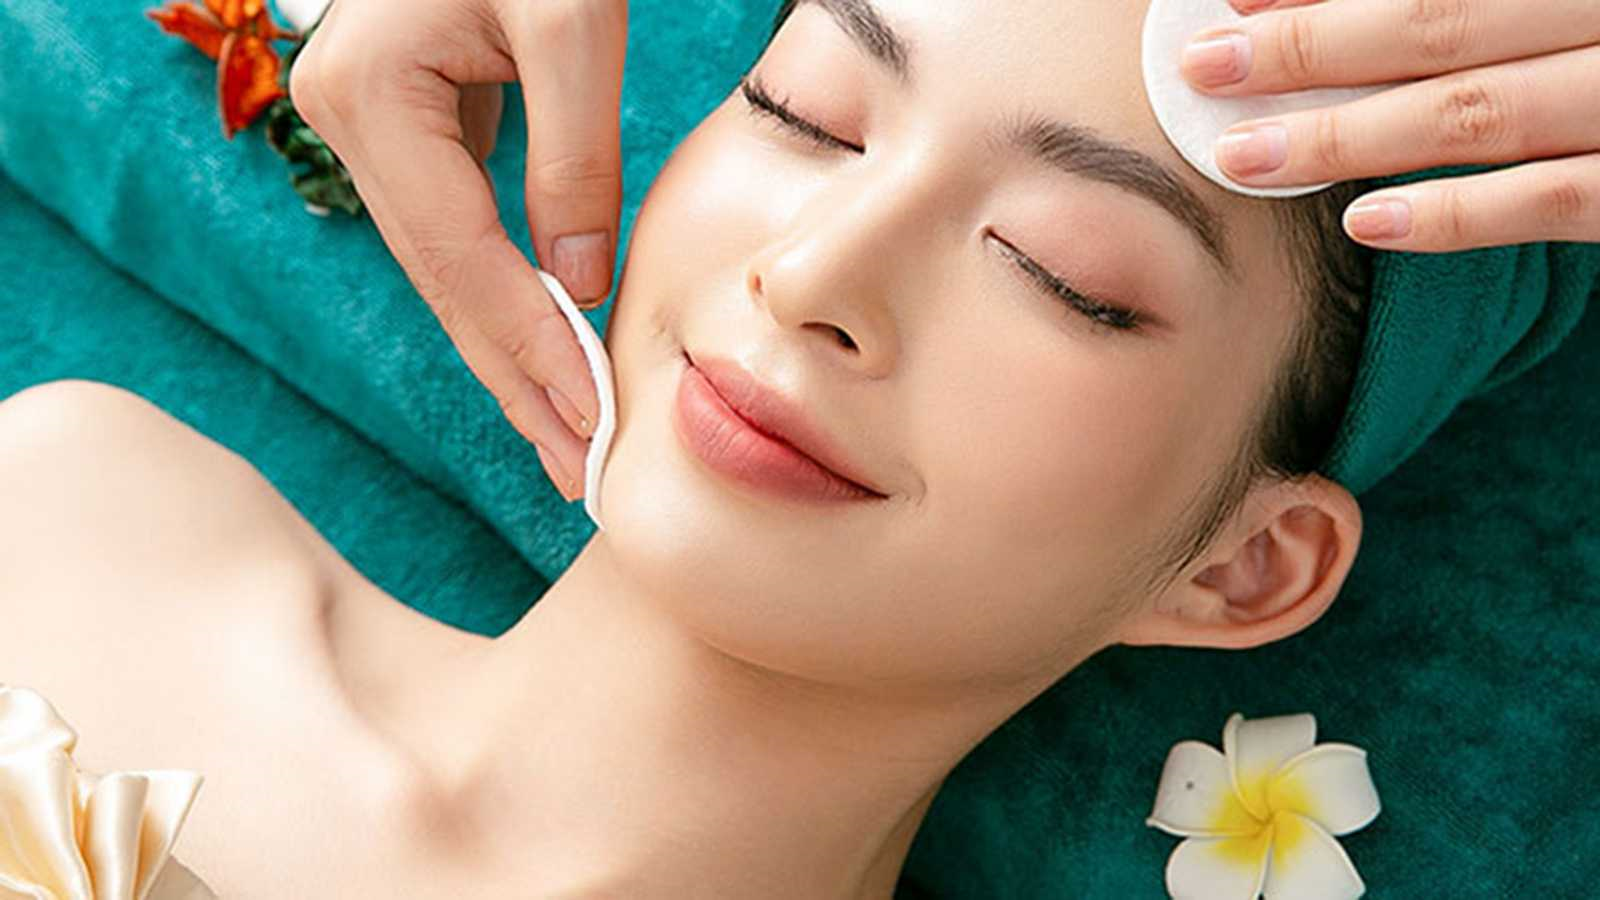 Hình ảnh Voucher Massage (Mặt) - Chang Nails